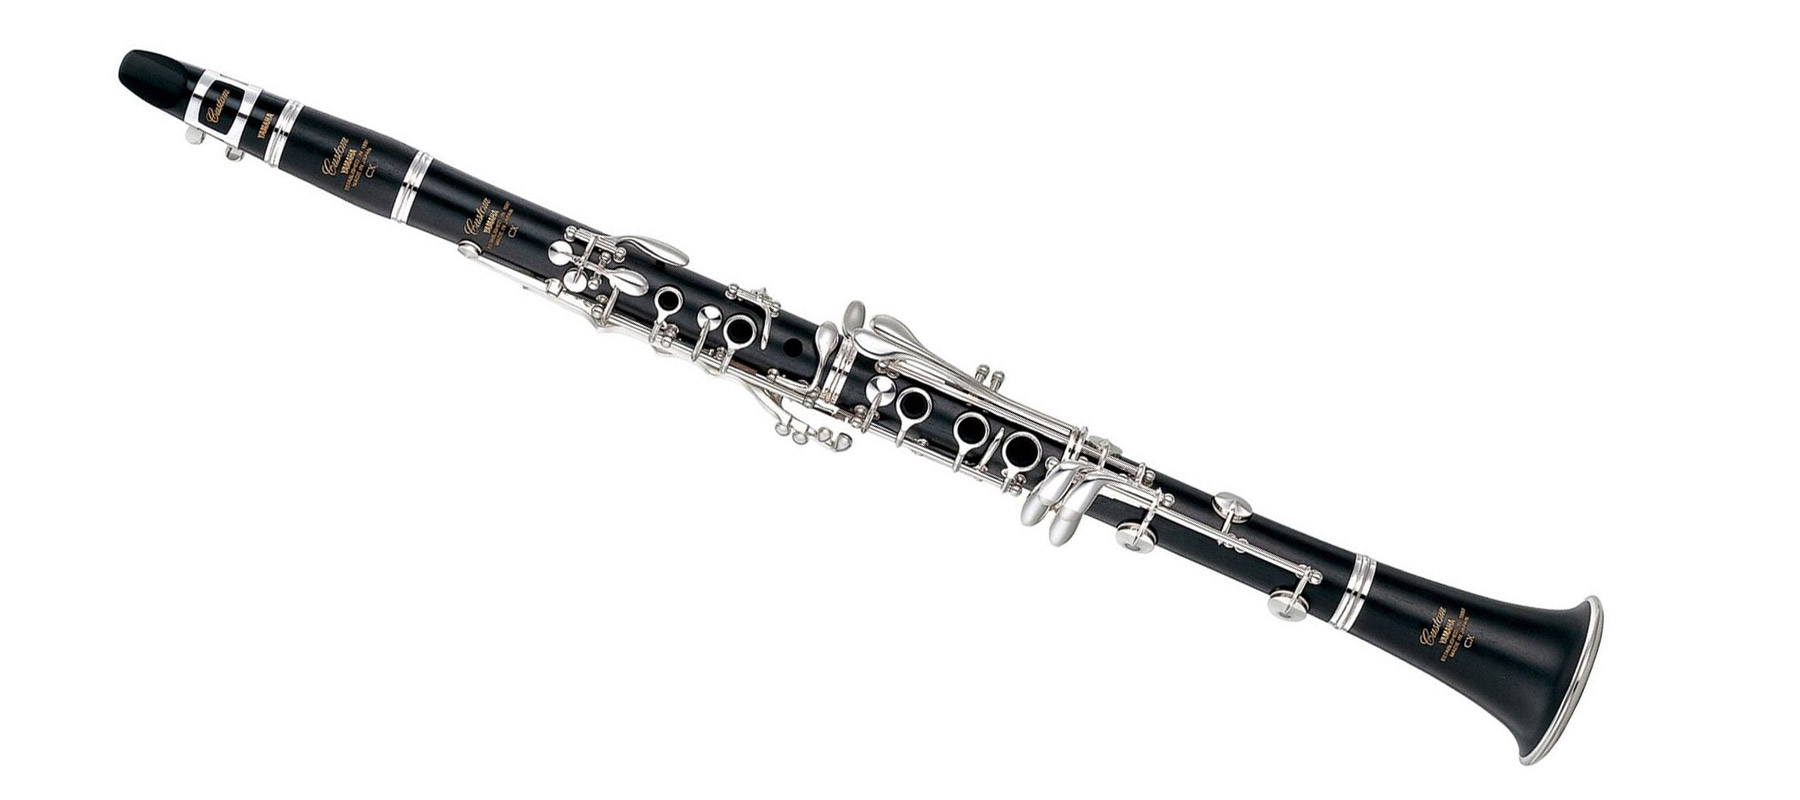 Yamaha custom cx clarinet on sale - Buy a Yamaha Clarinet